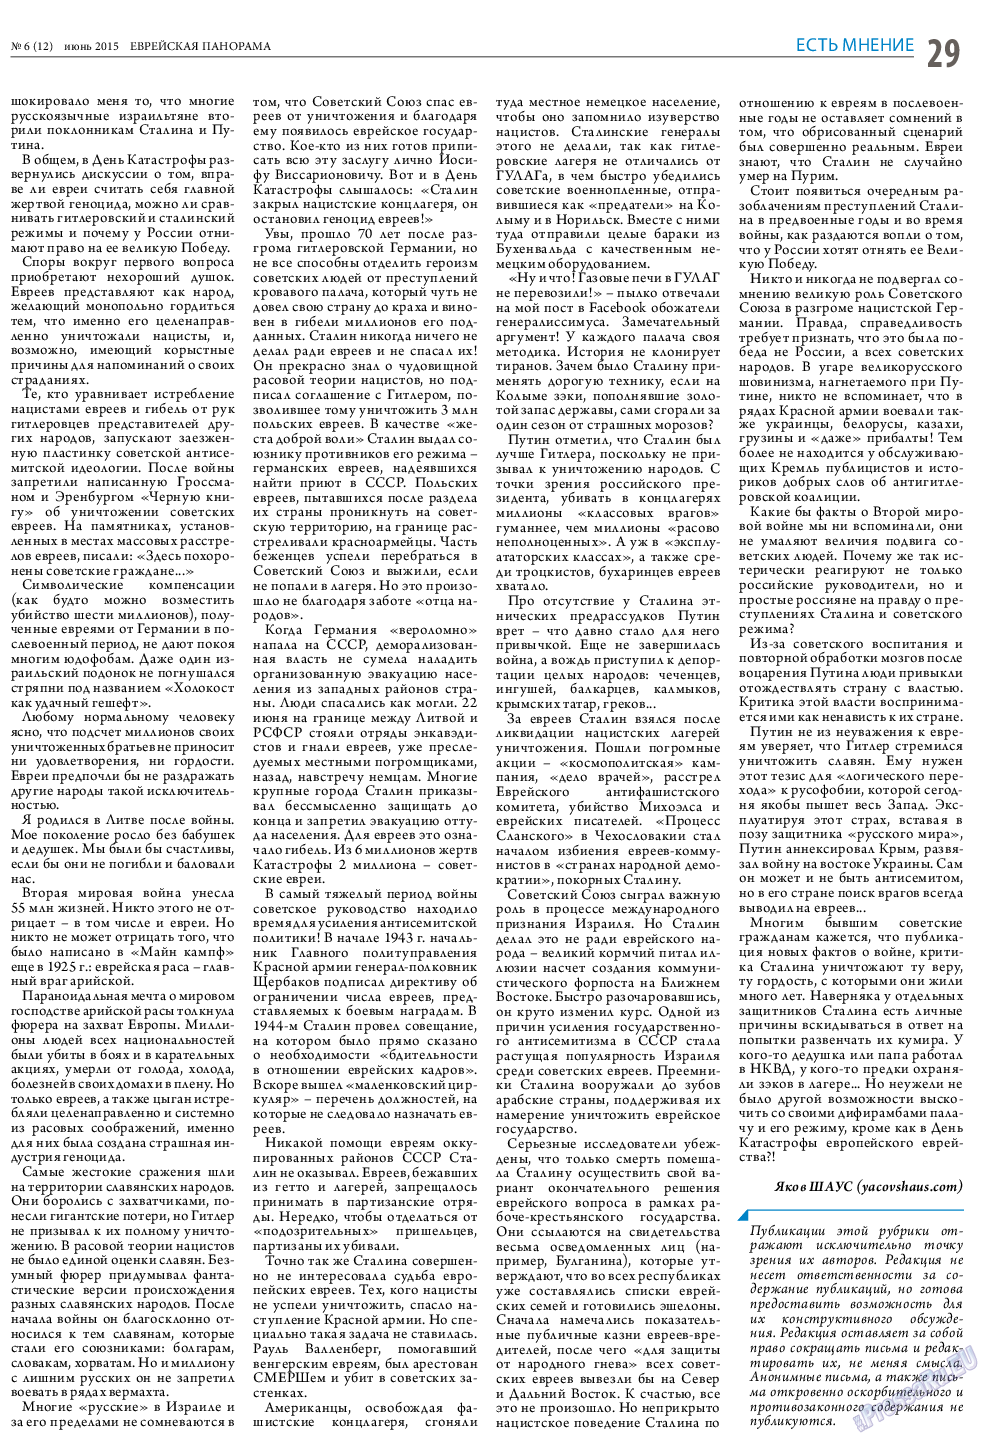 Еврейская панорама, газета. 2015 №6 стр.29